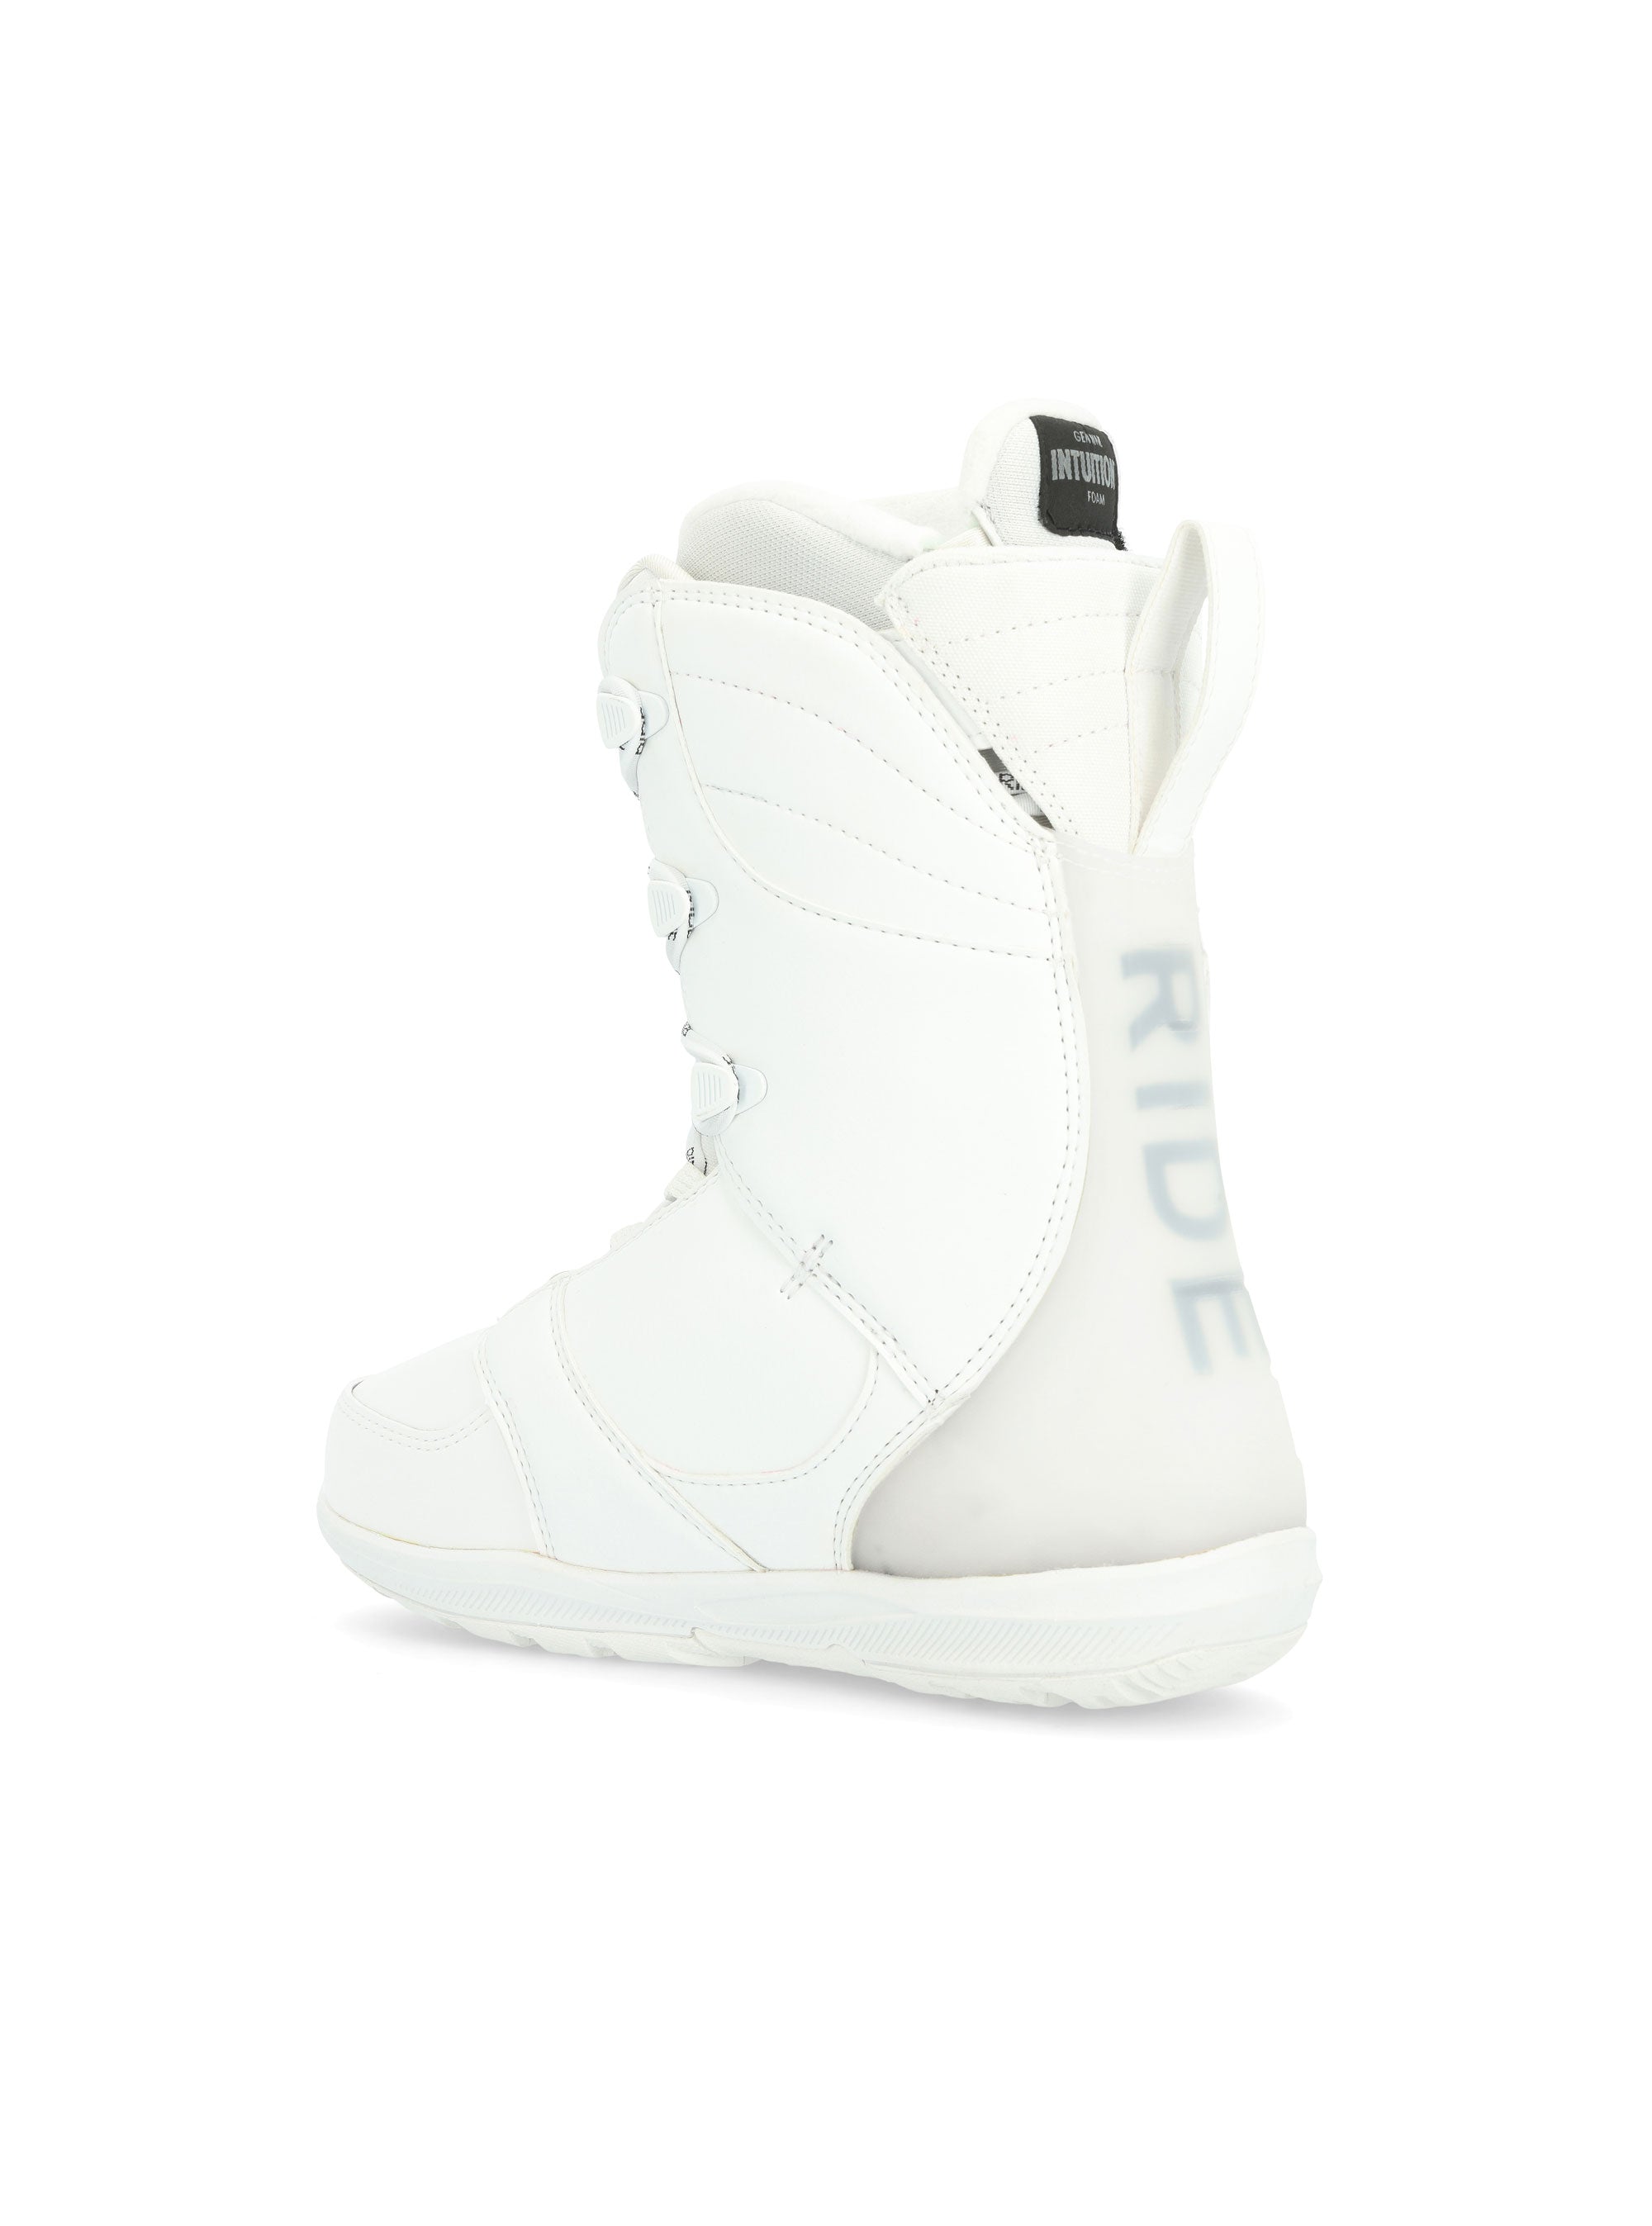 Context Snowboard Boots